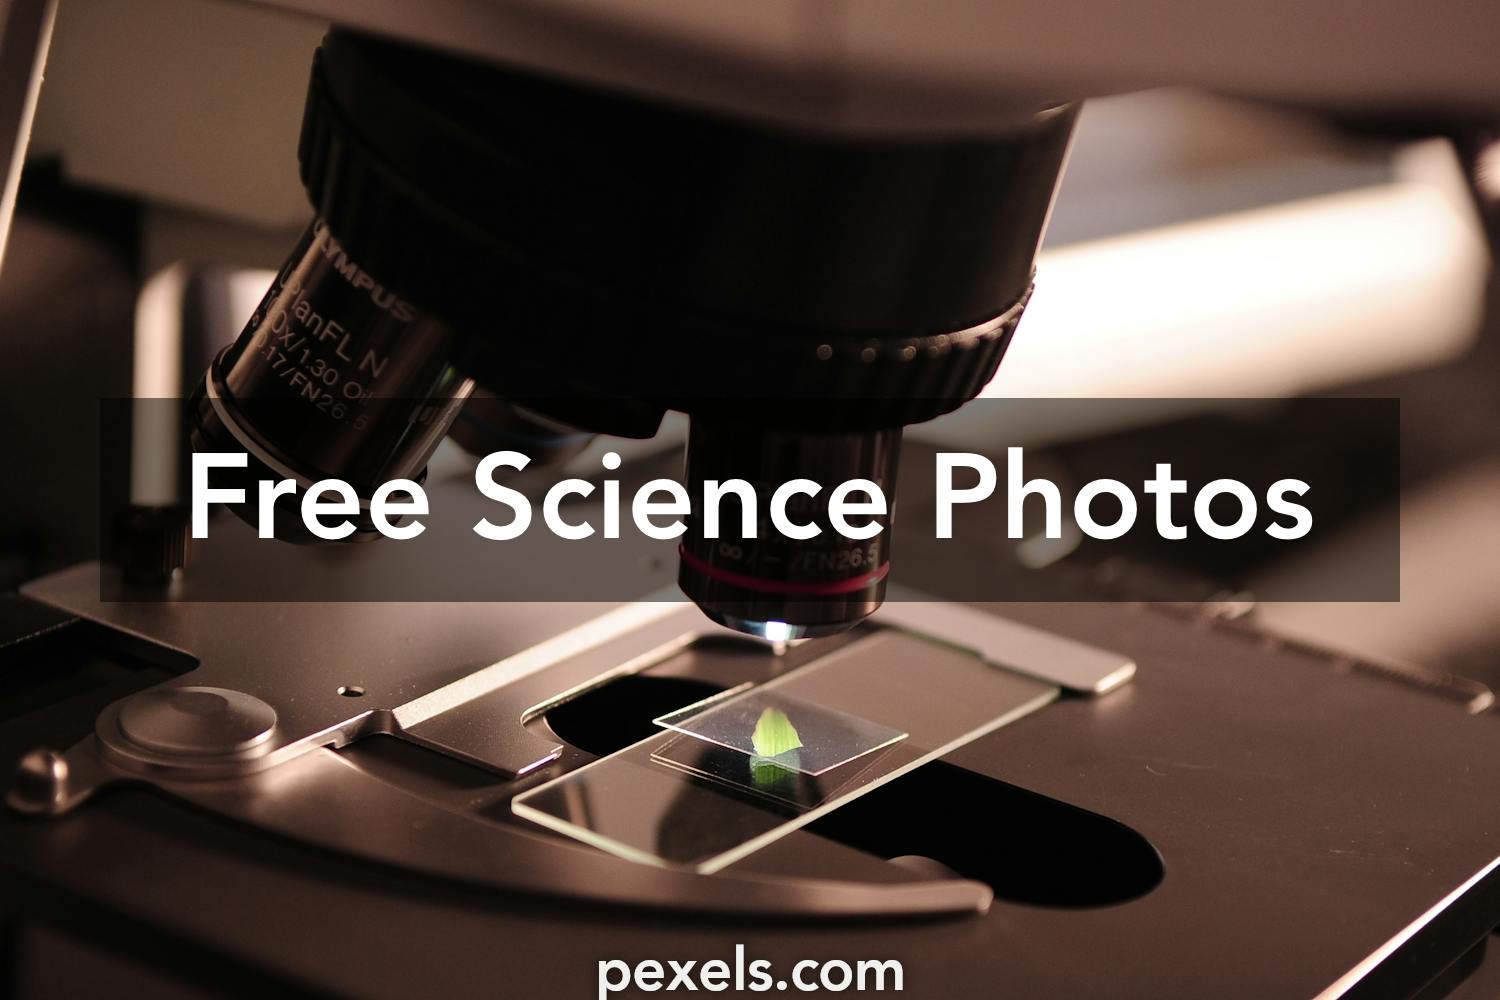 Free stock photos of science · Pexels